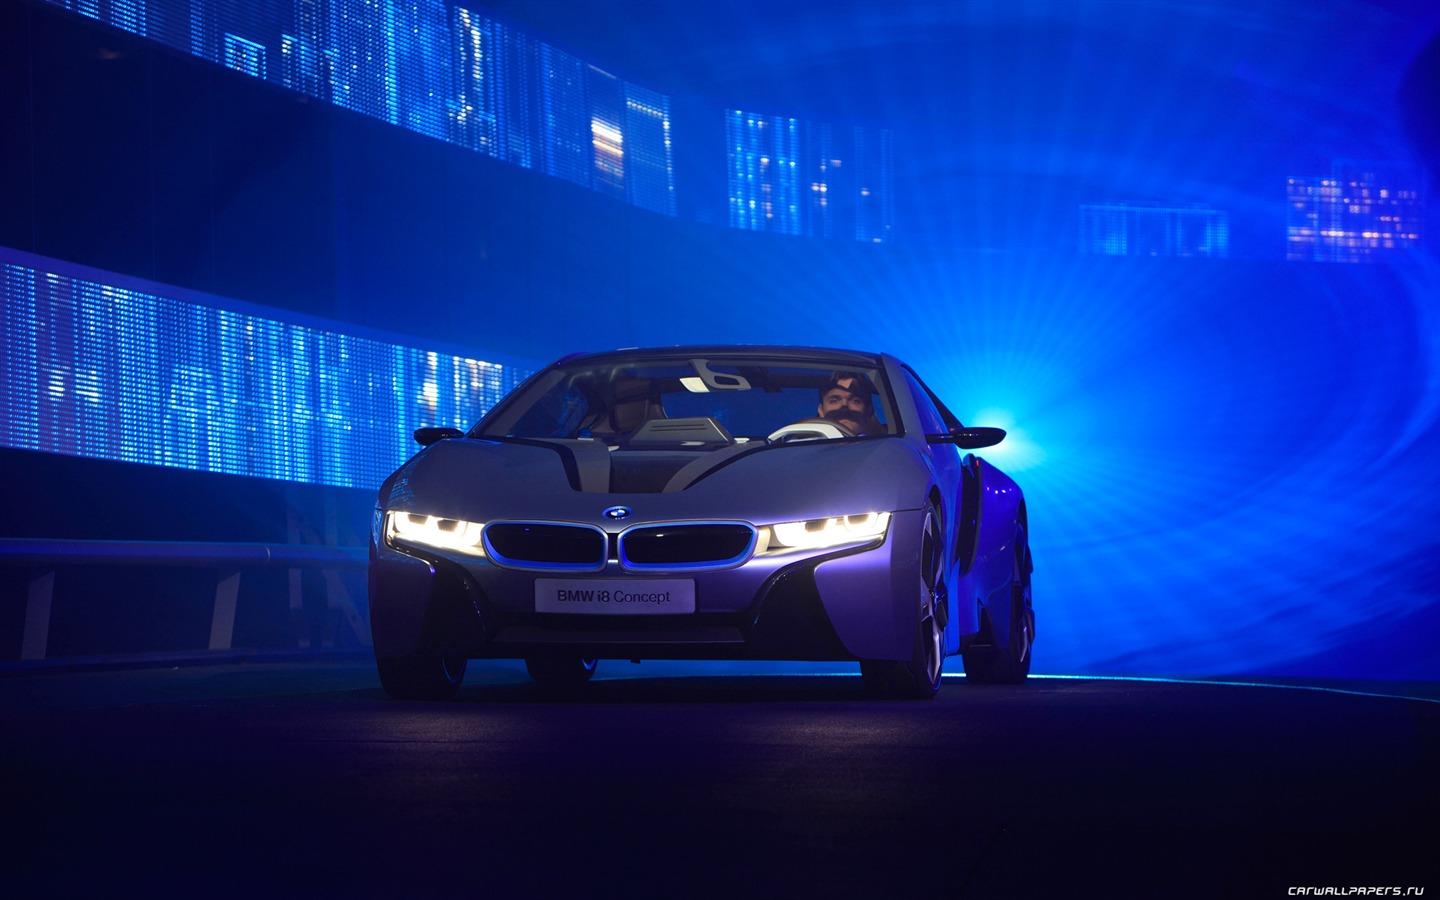 BMW i8 Concept - 2011 寶馬 #19 - 1440x900